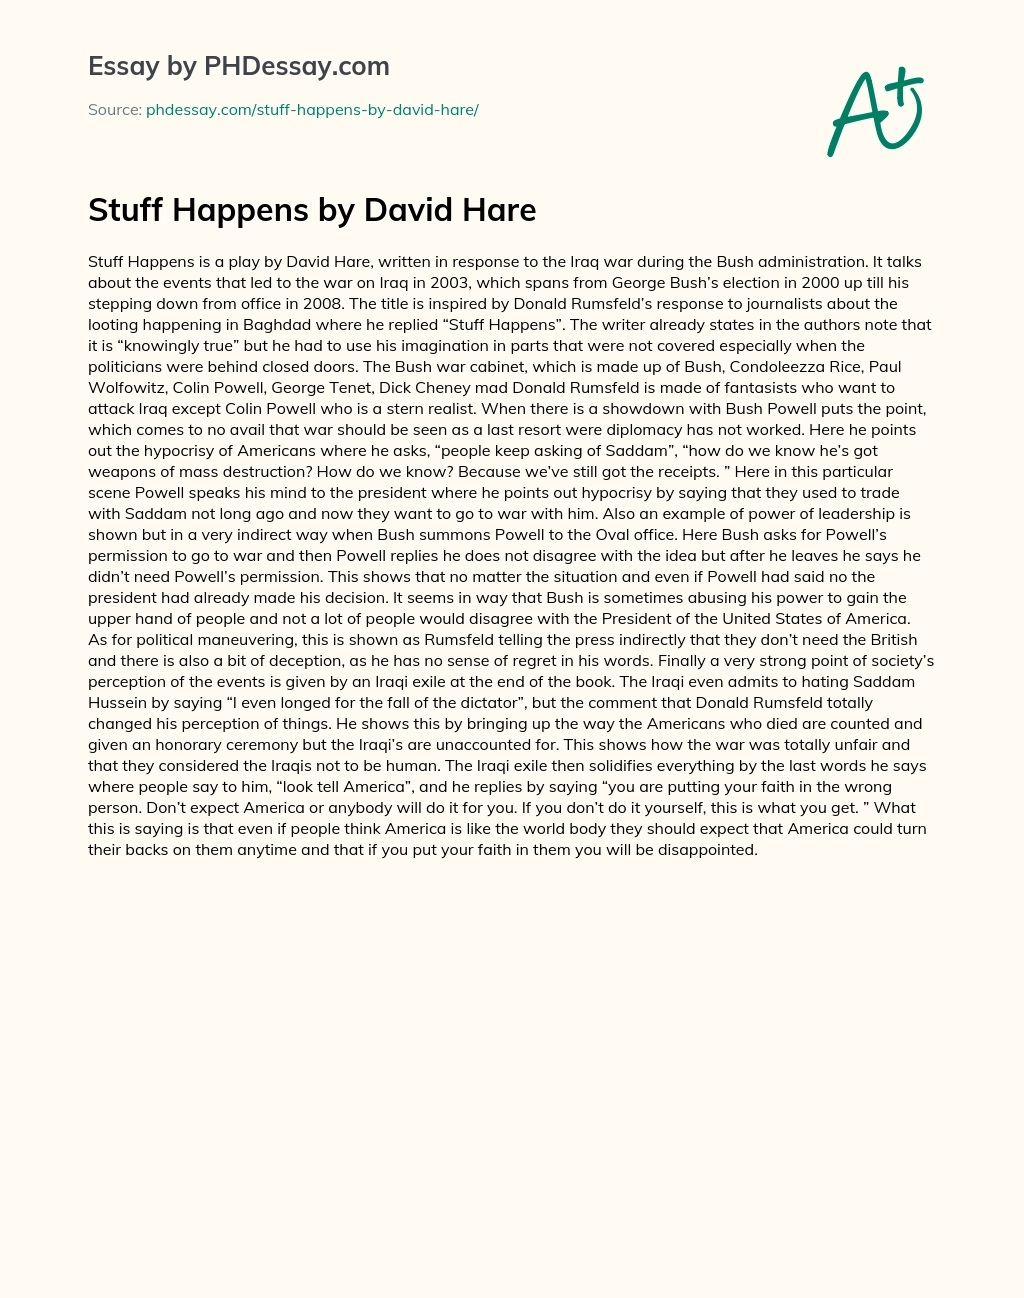 Stuff Happens by David Hare essay